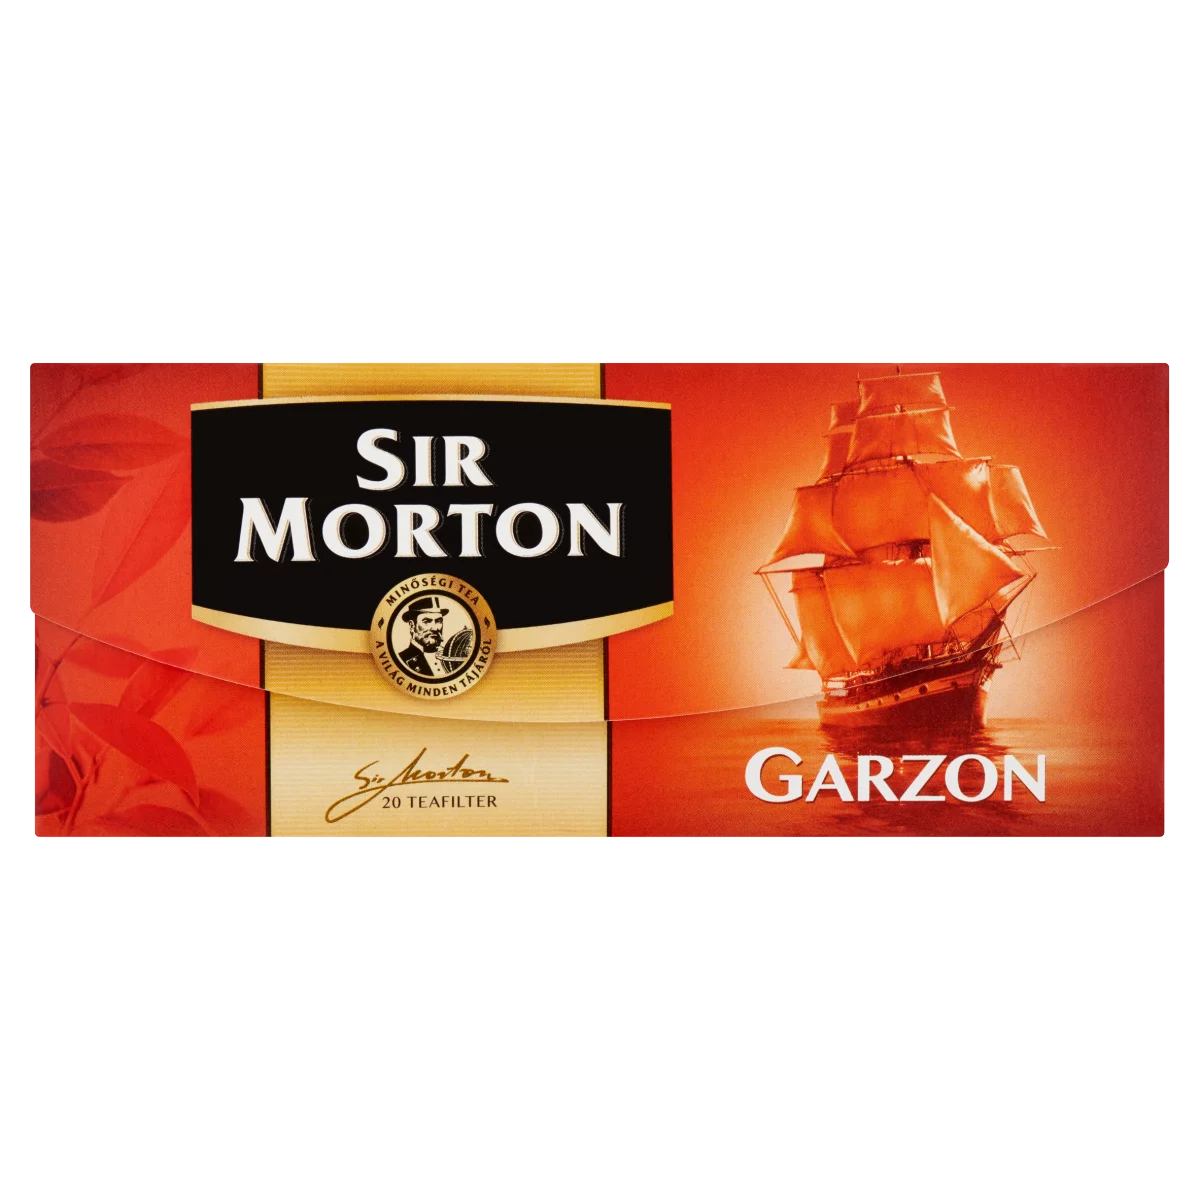 Sir Morton Garzon fekete tea keverék 20 filter 30 g